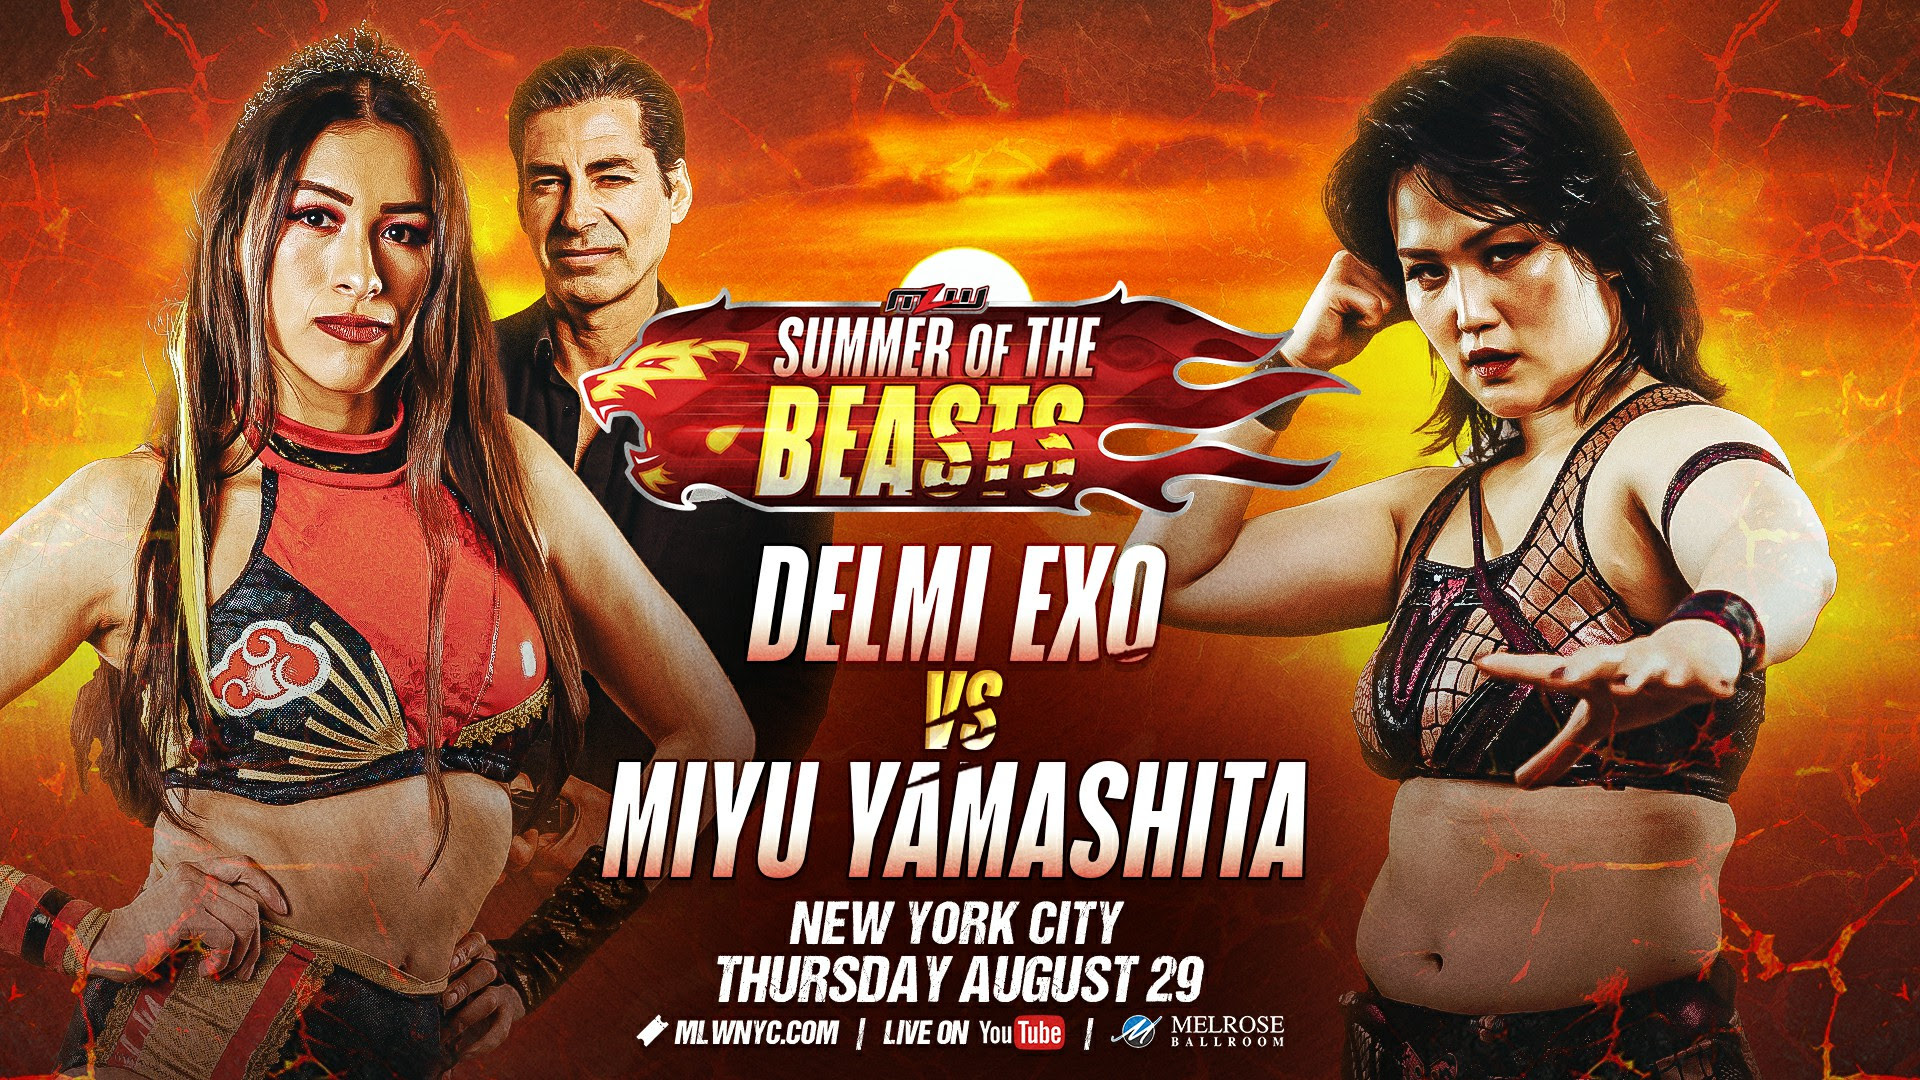 Miyu Yamashita vs. Delmi Exo Set for MLW Summer of the Beasts